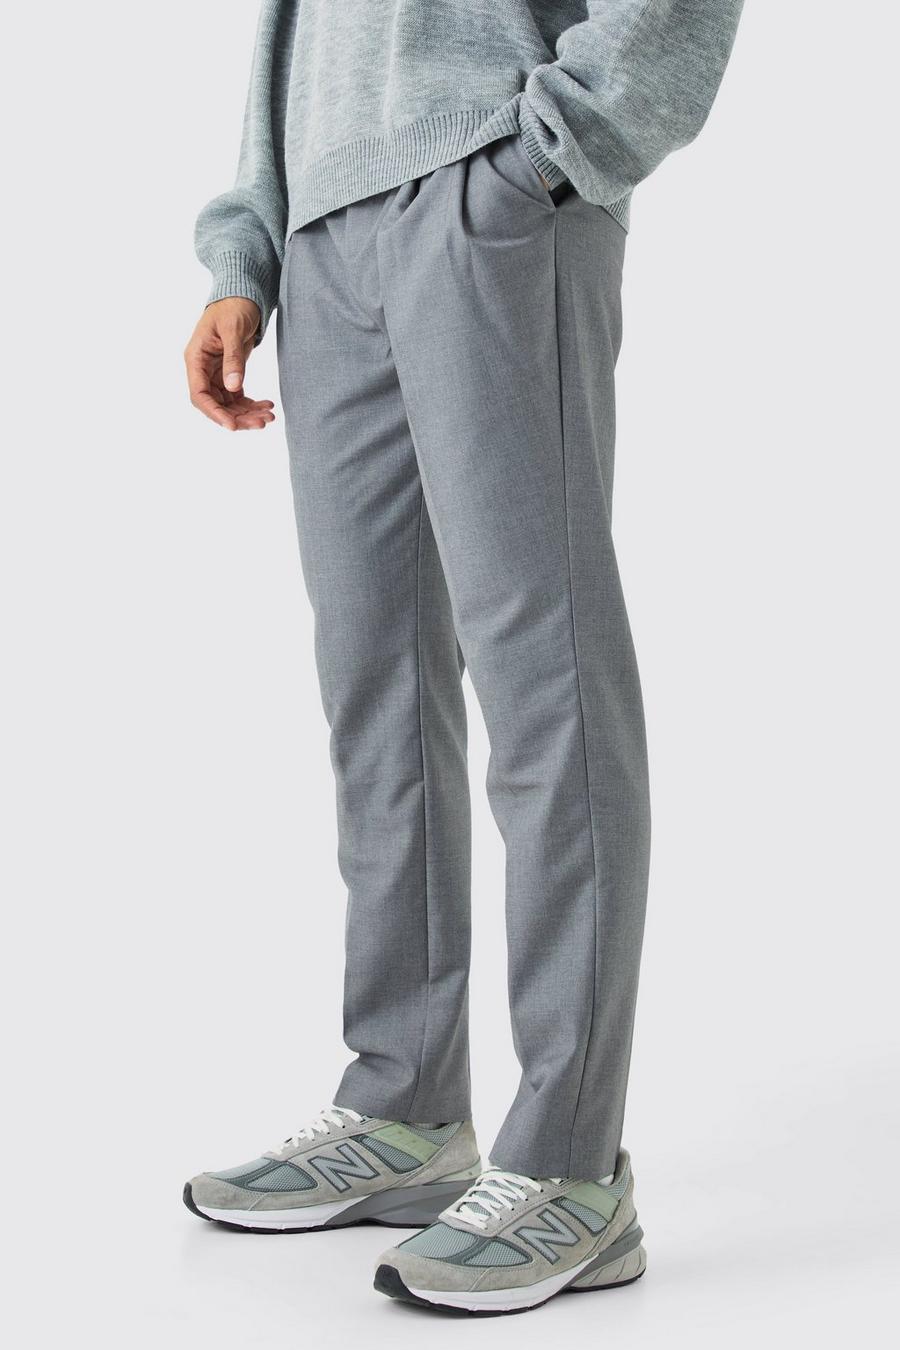 Pantalón plisado entallado recto, Grey